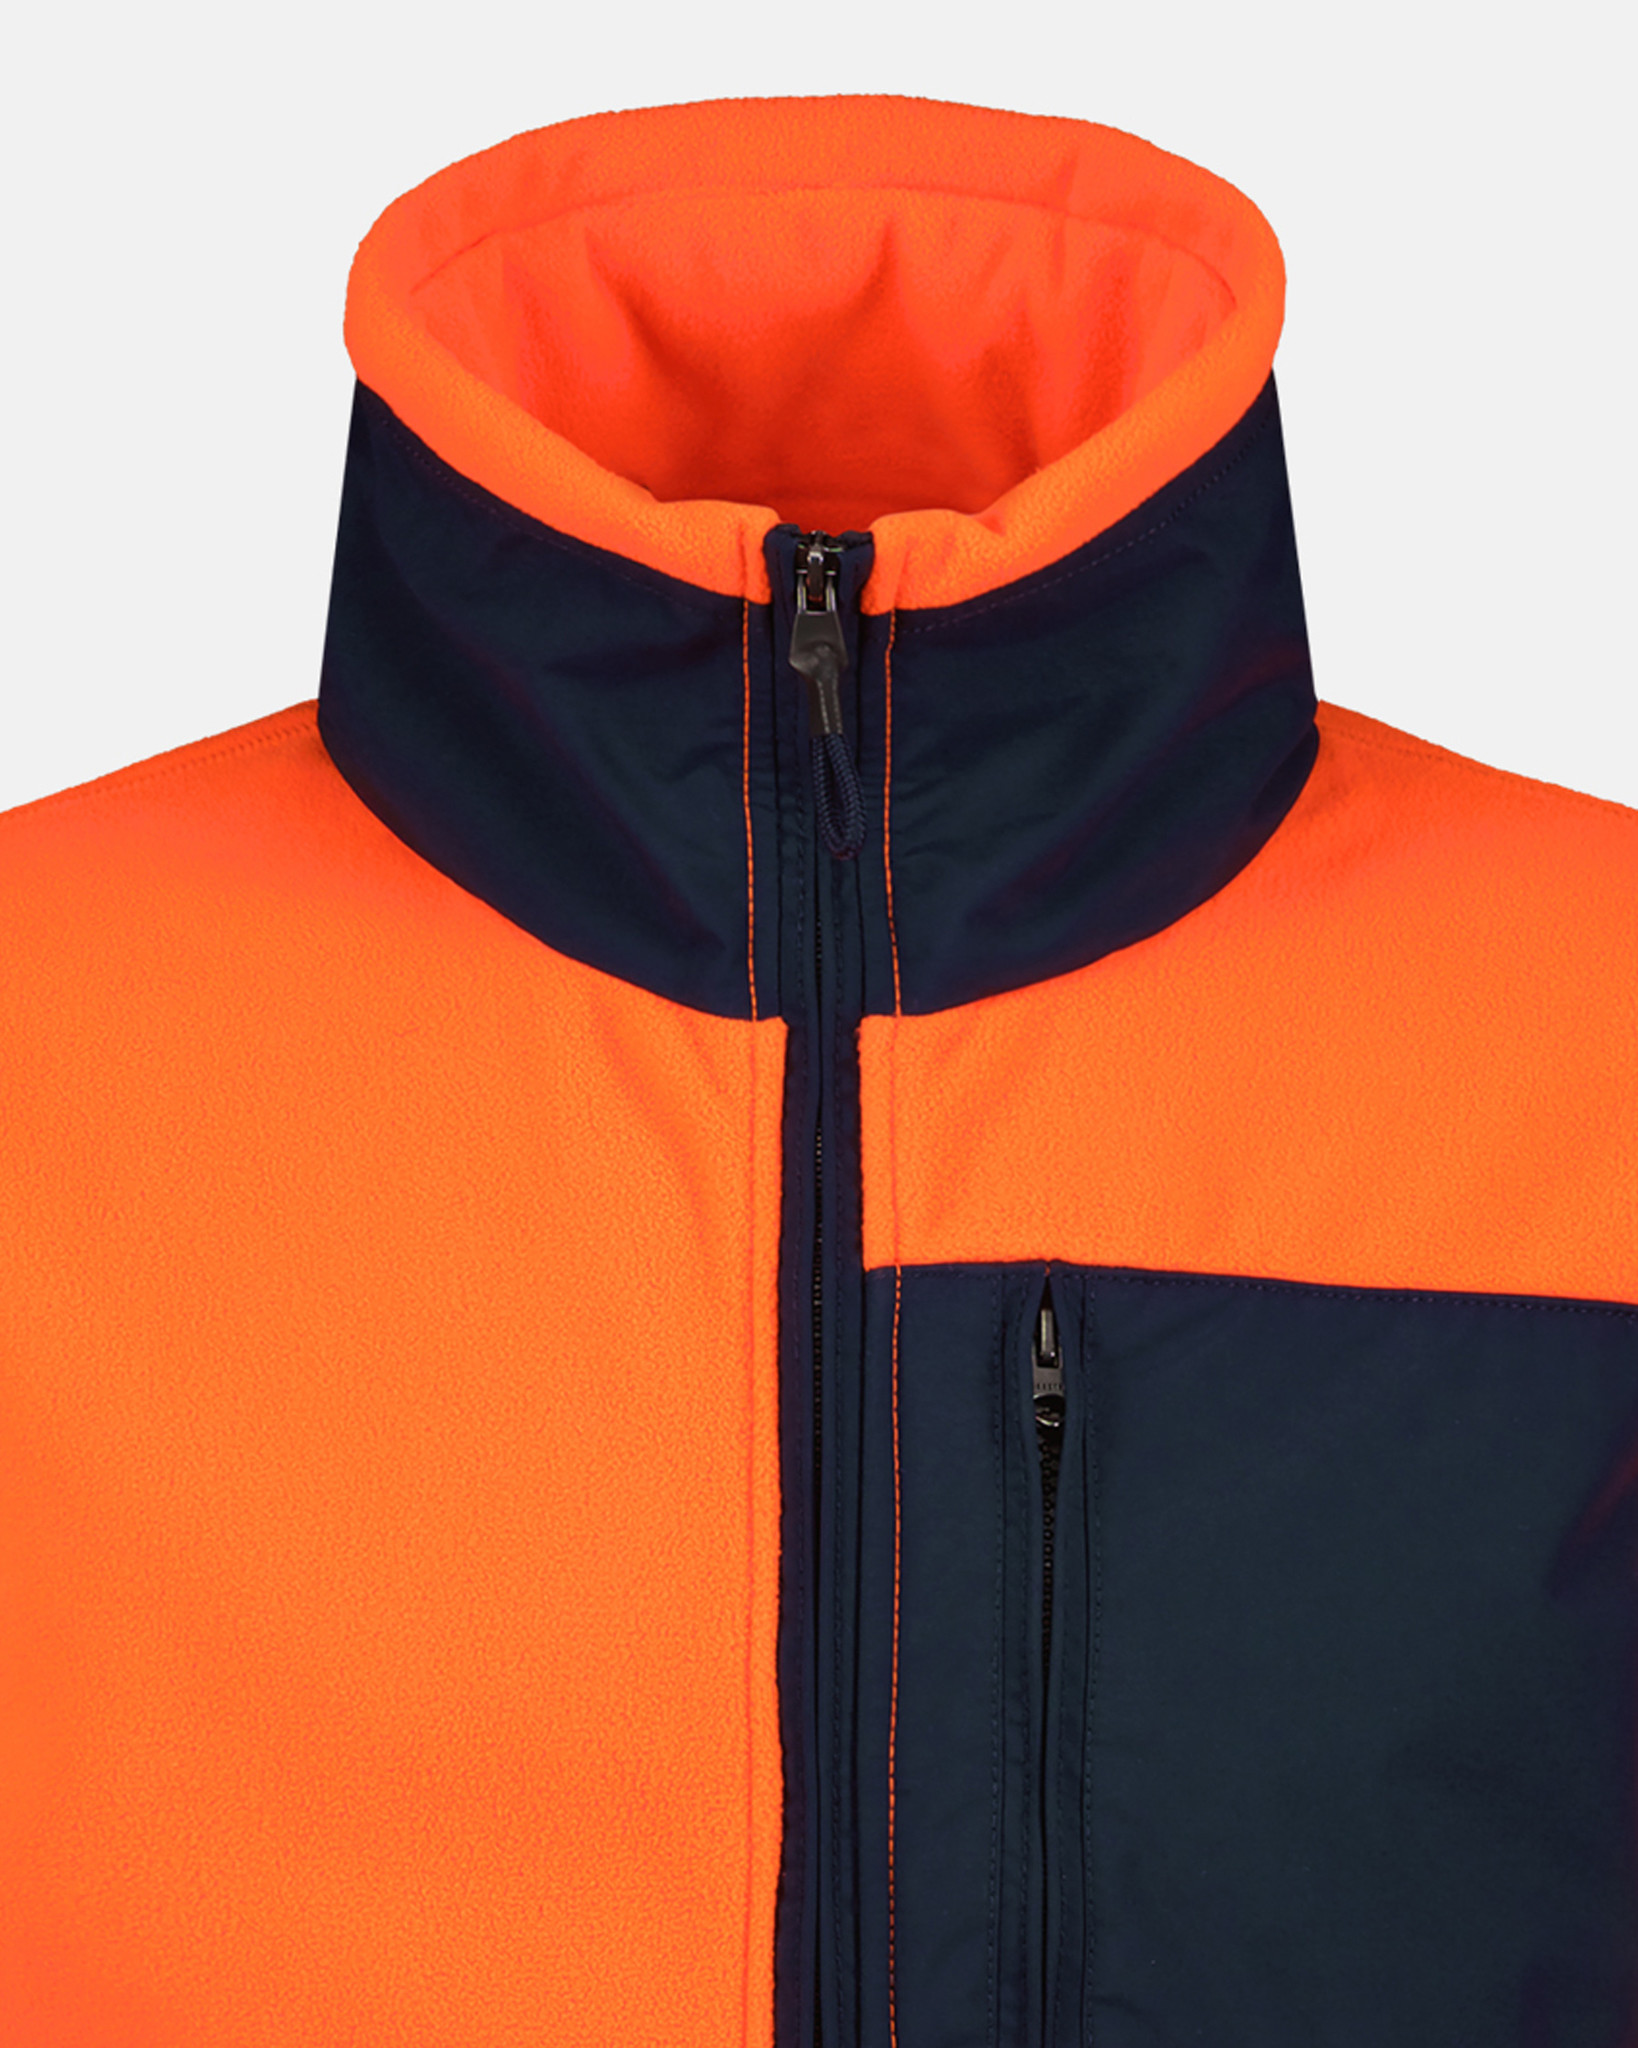 The 100% recycled polyester Viking fleece orange